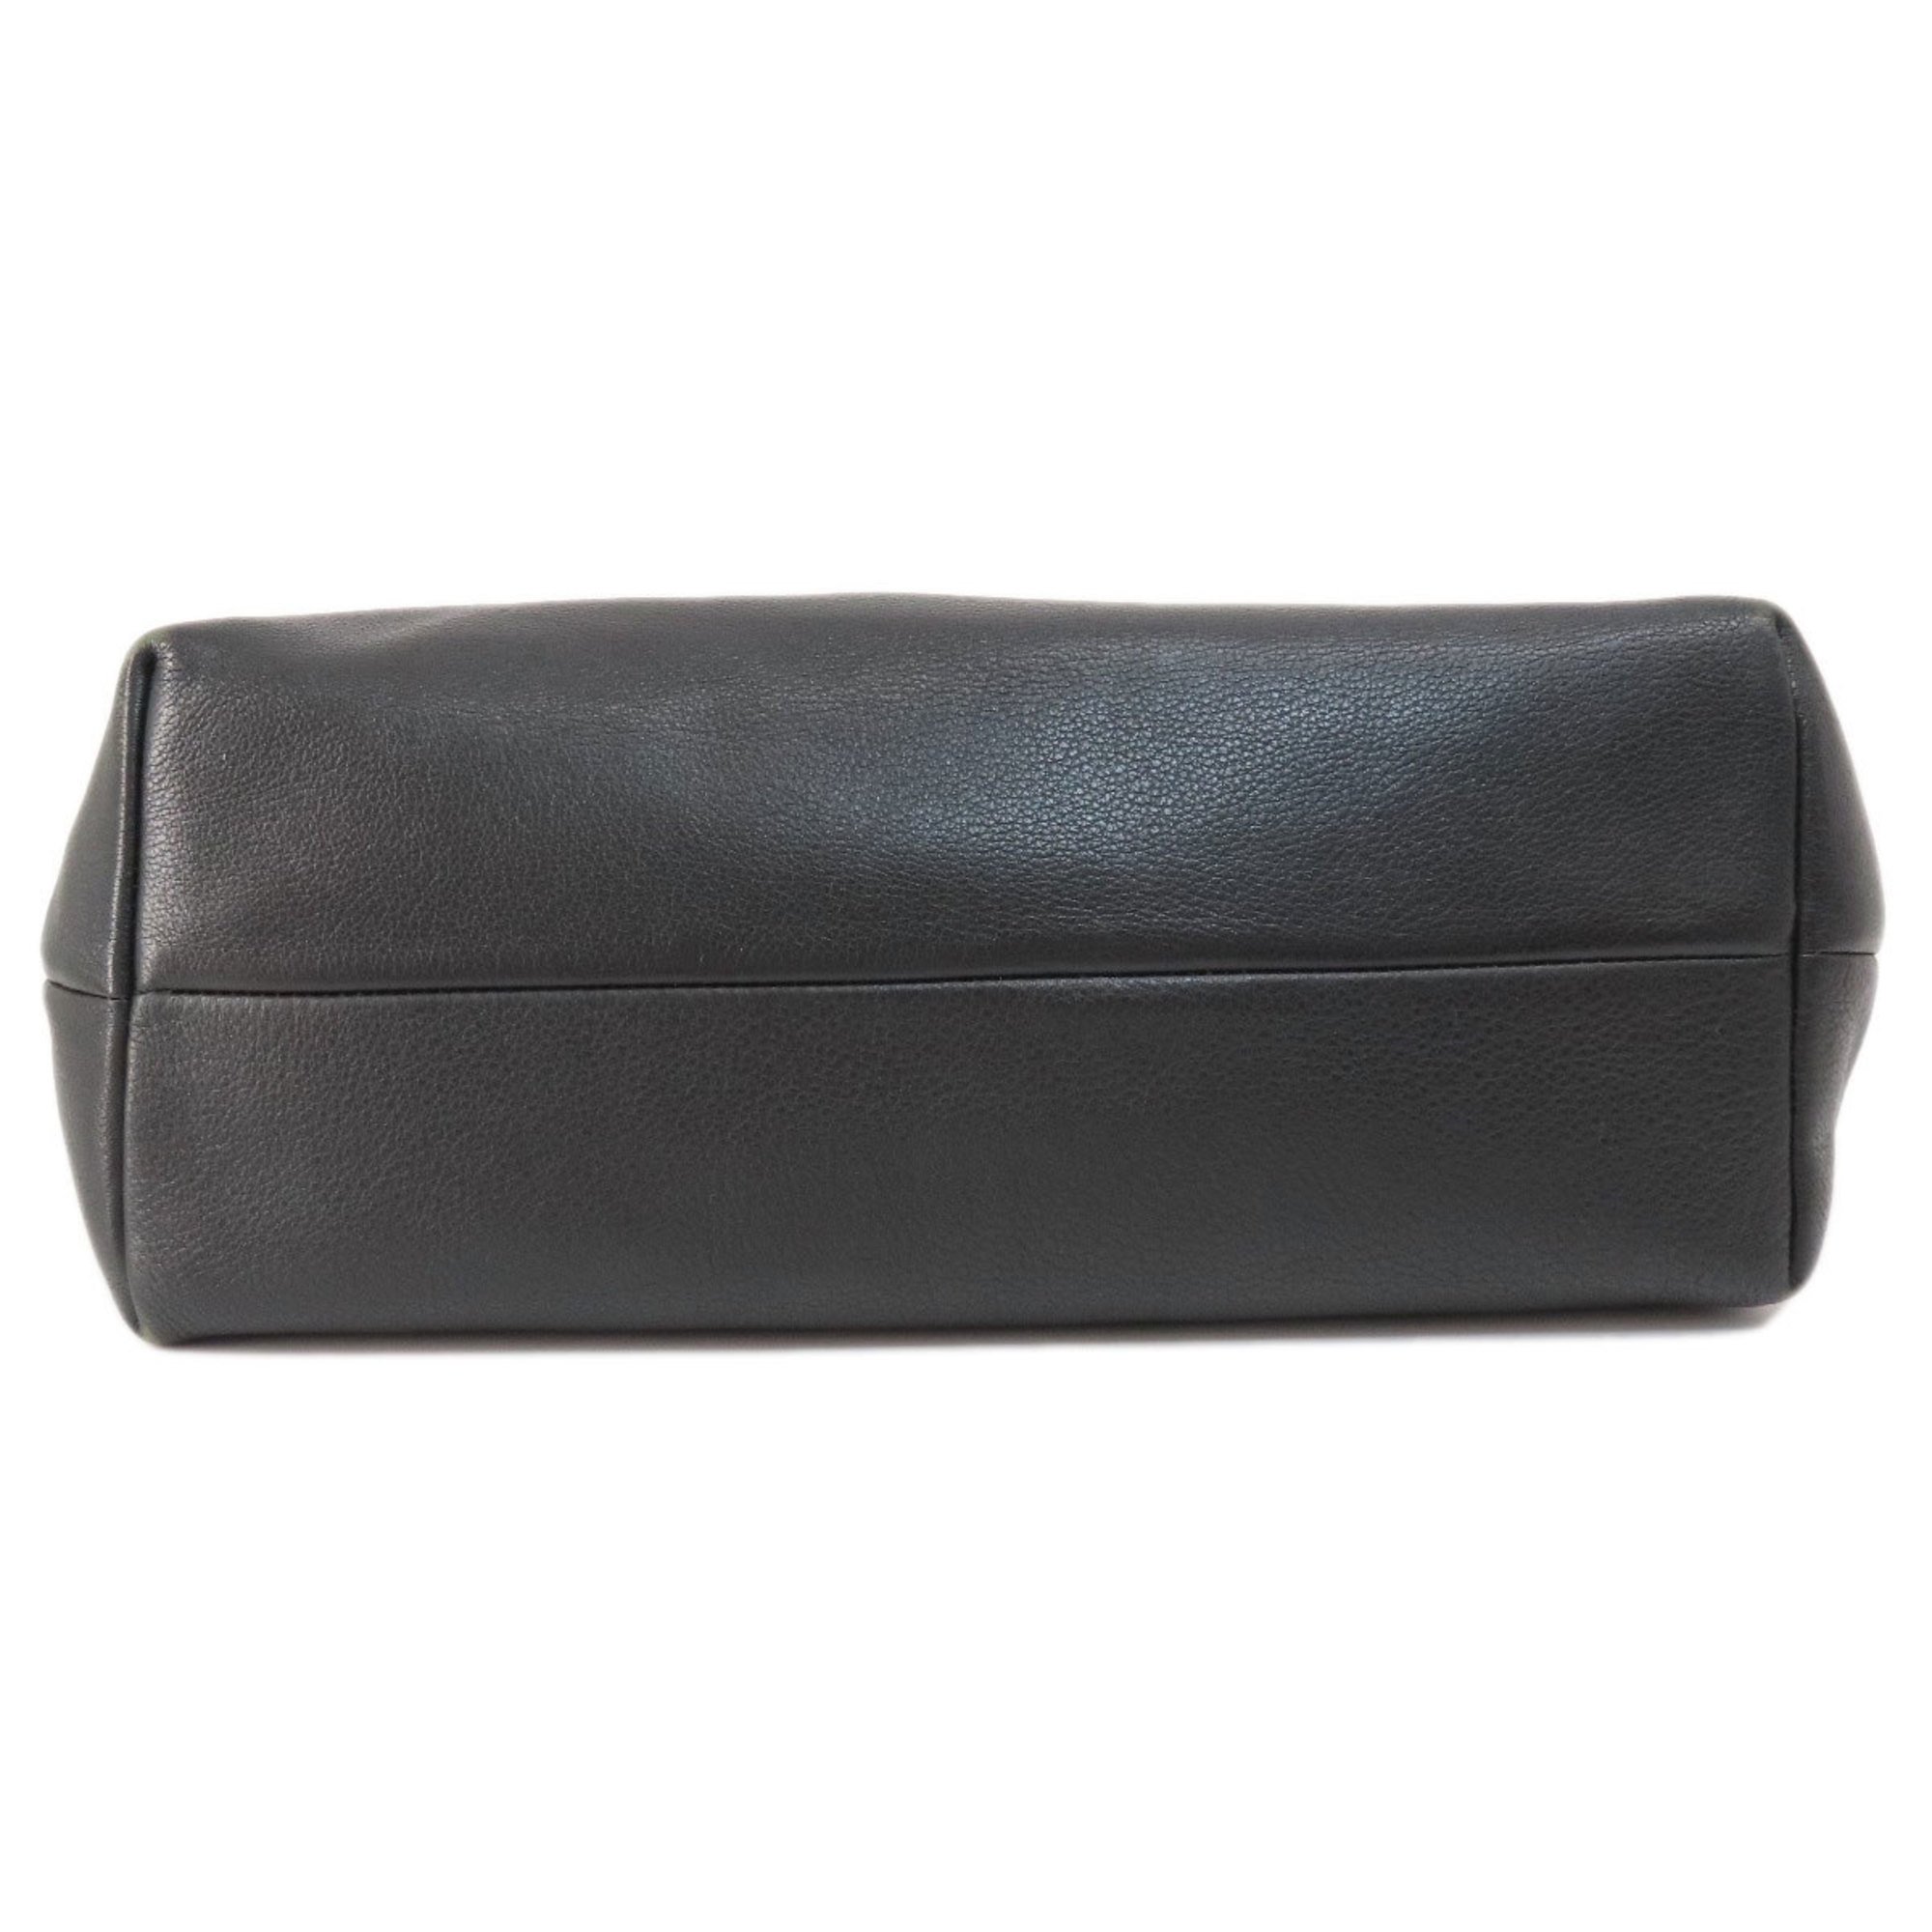 Coach F36628 handbag leather ladies